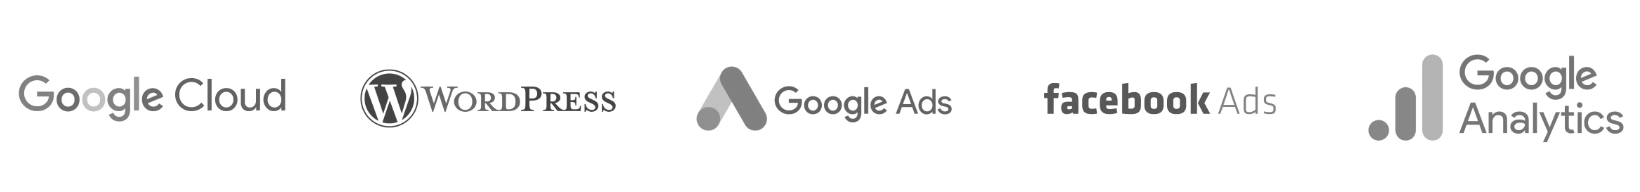 Axiom Online digital marketing Peterborough Coventry - Google Cloud WordPress Google Ads Facebook Ads Google Analytics